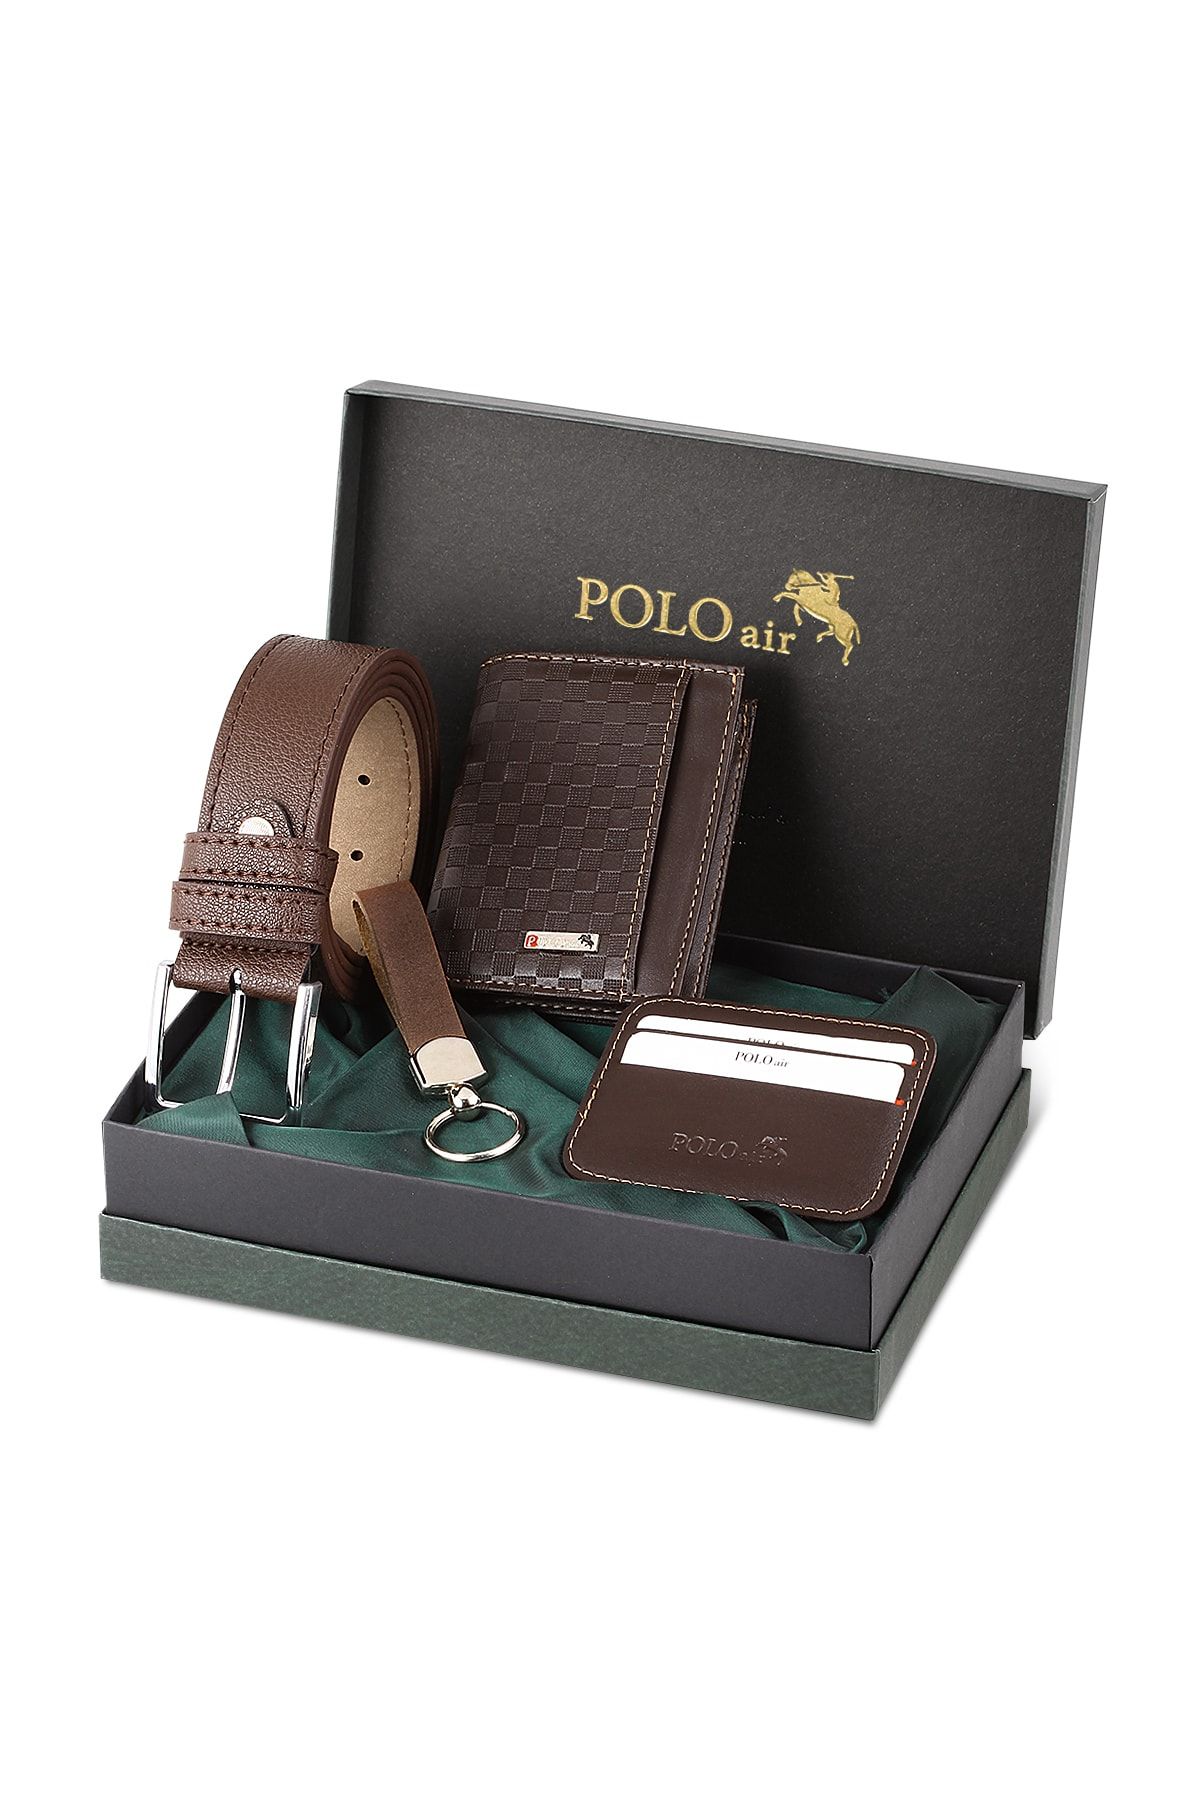 polo air Dama Desen Cüzdan Kendinden Kartlık Kemer Anahtarlık Kombin Kahverengi Set